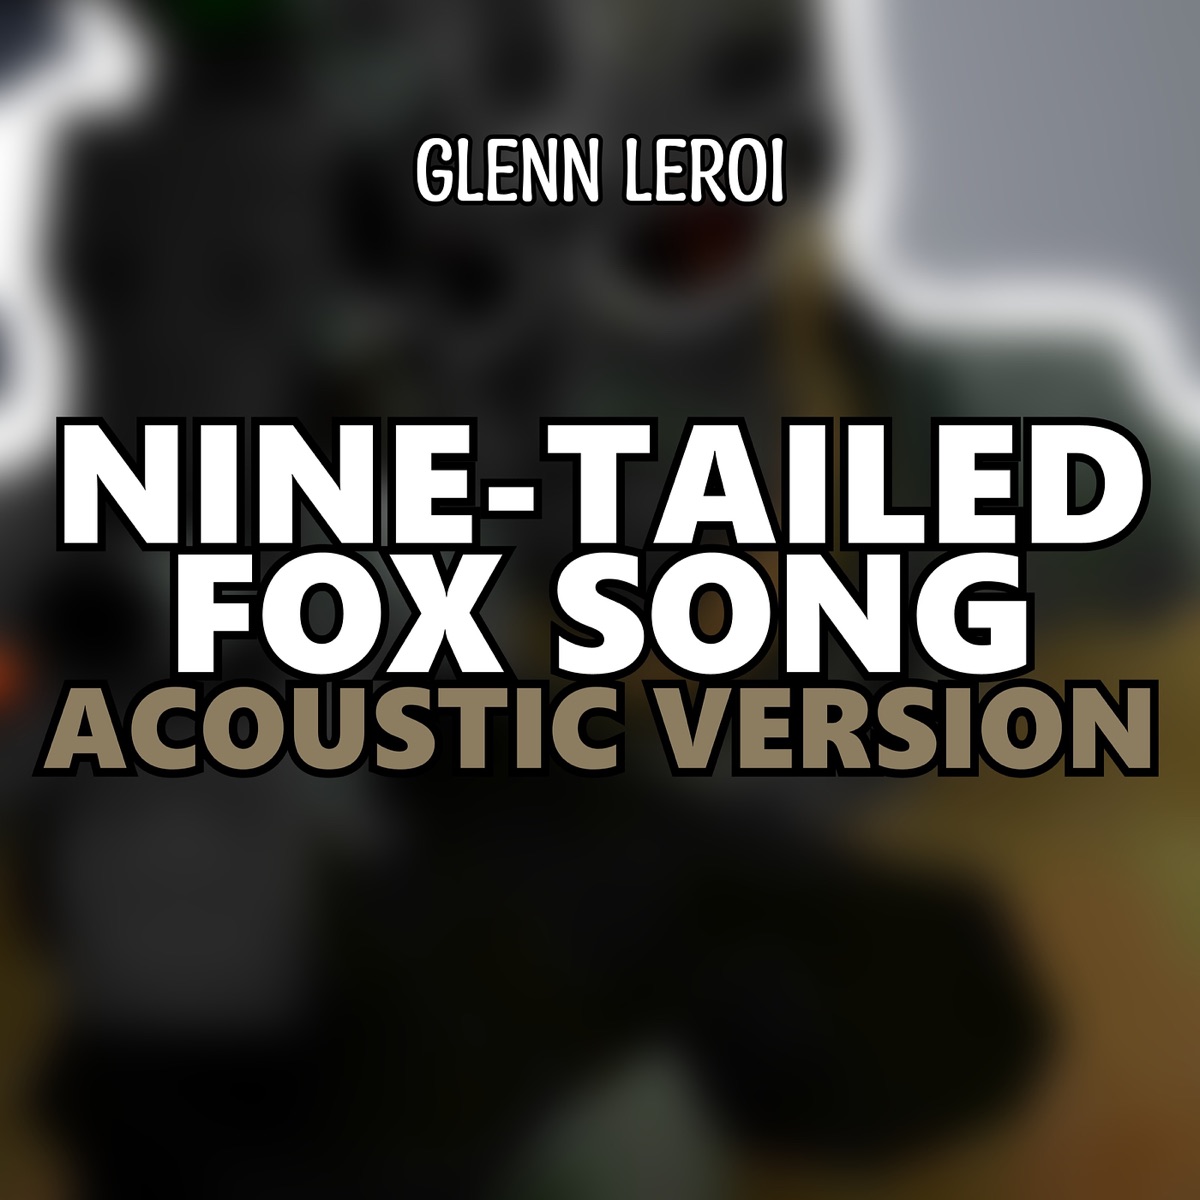 Glenn Leroi – SCP-714 Song Lyrics